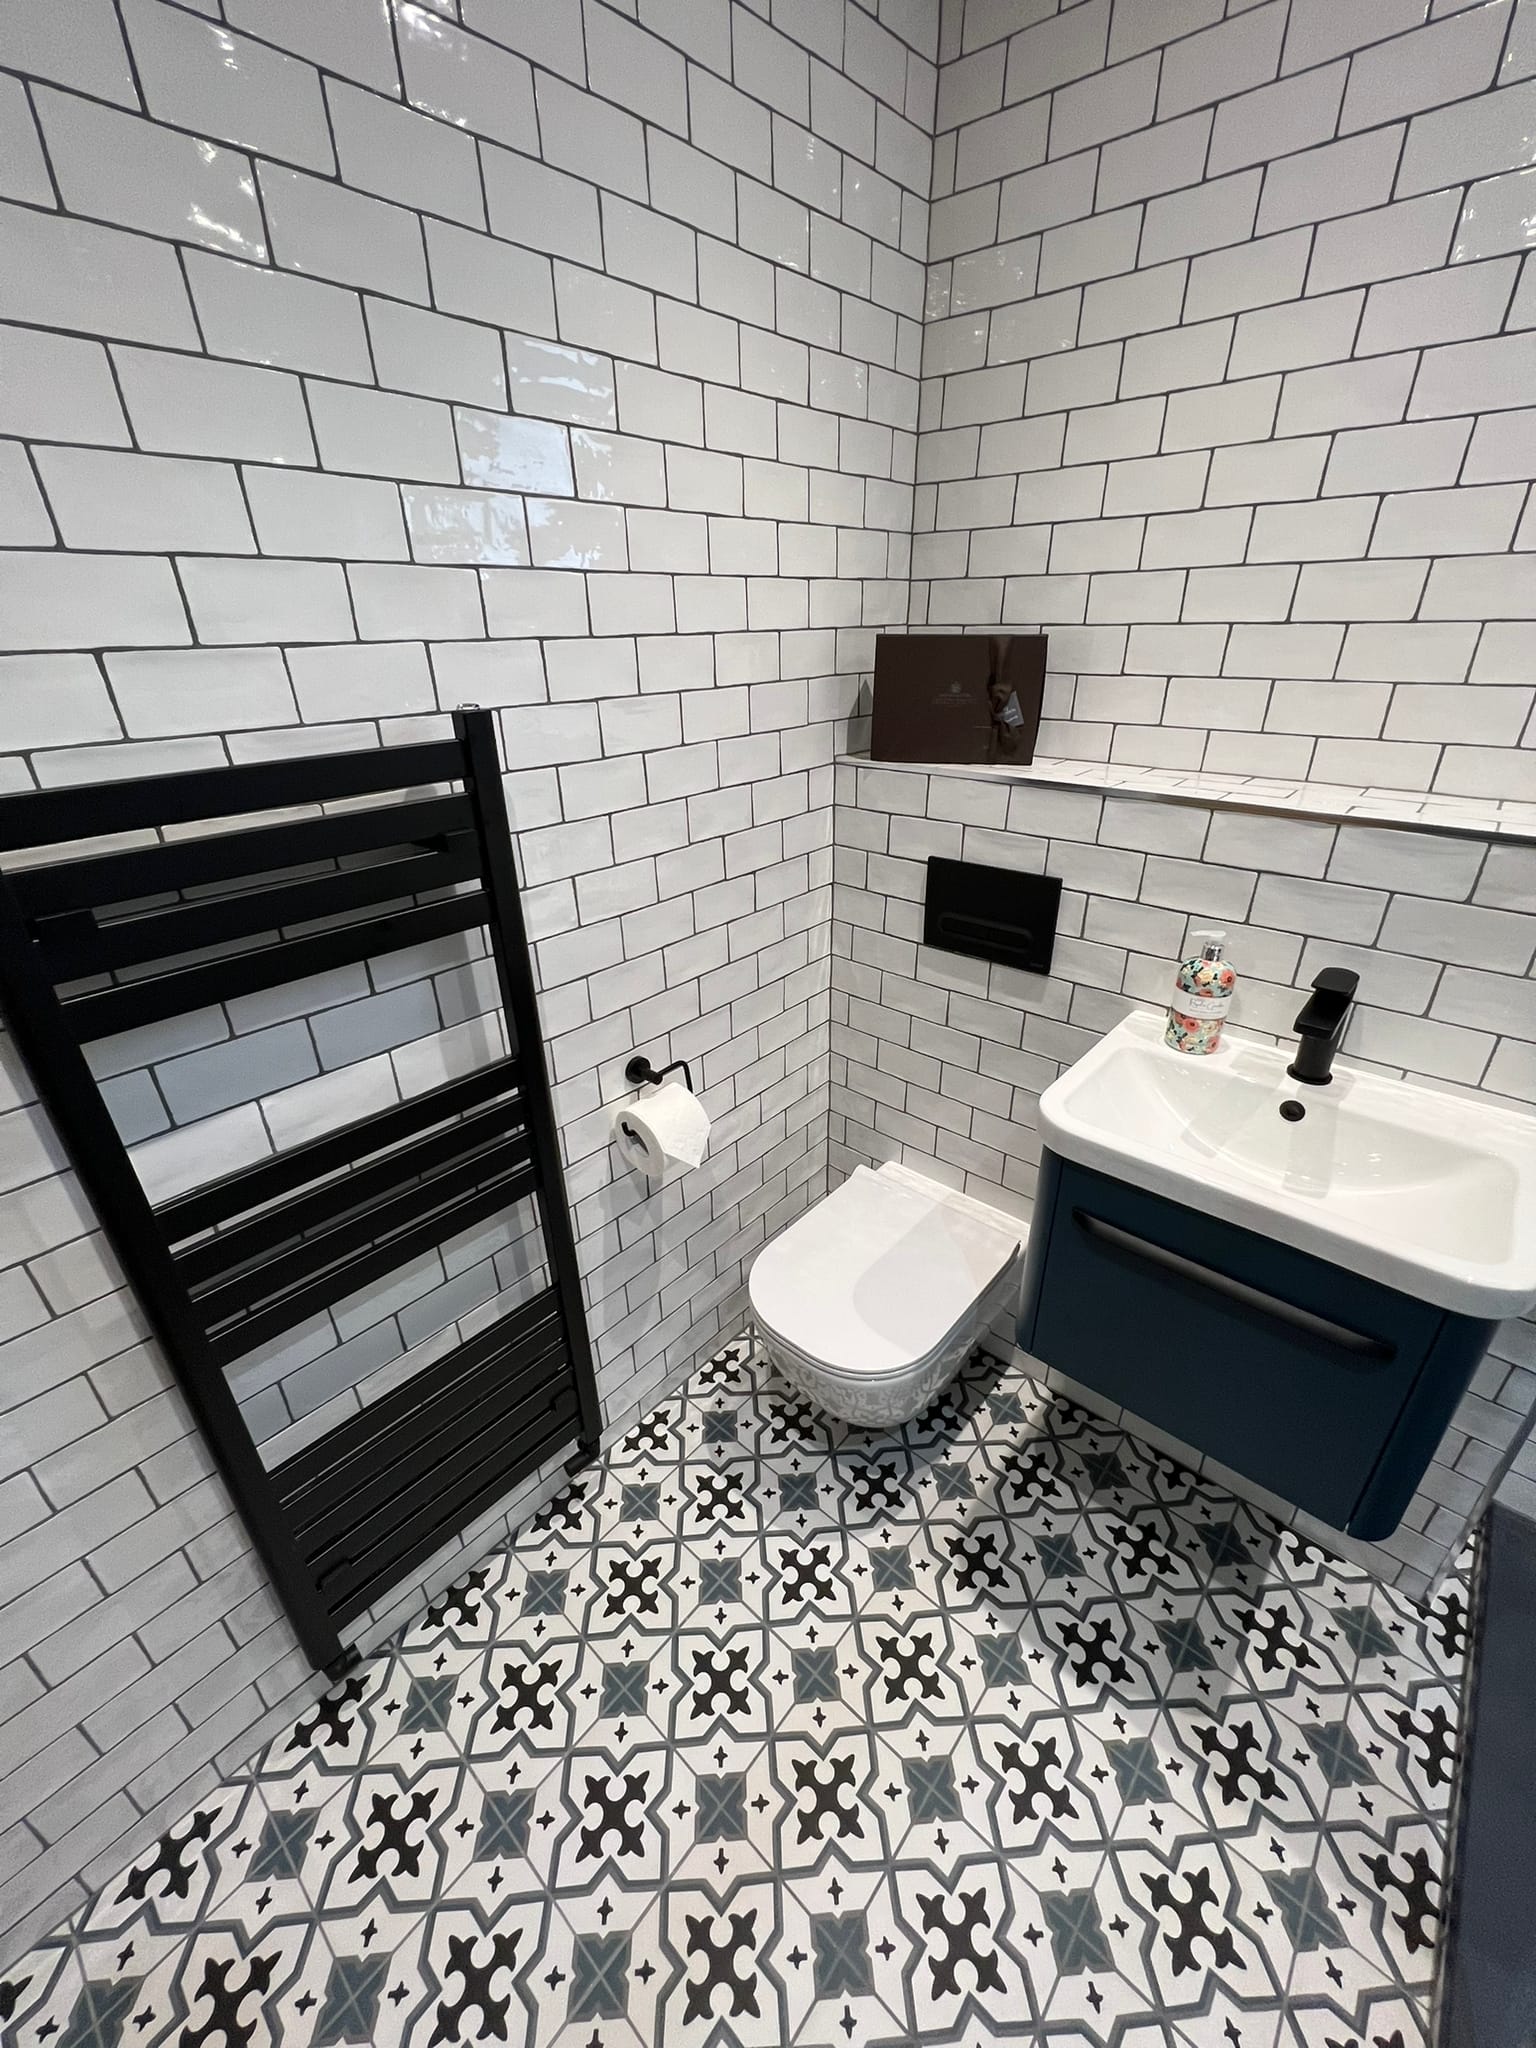 Monochrome bathroom with black fittings